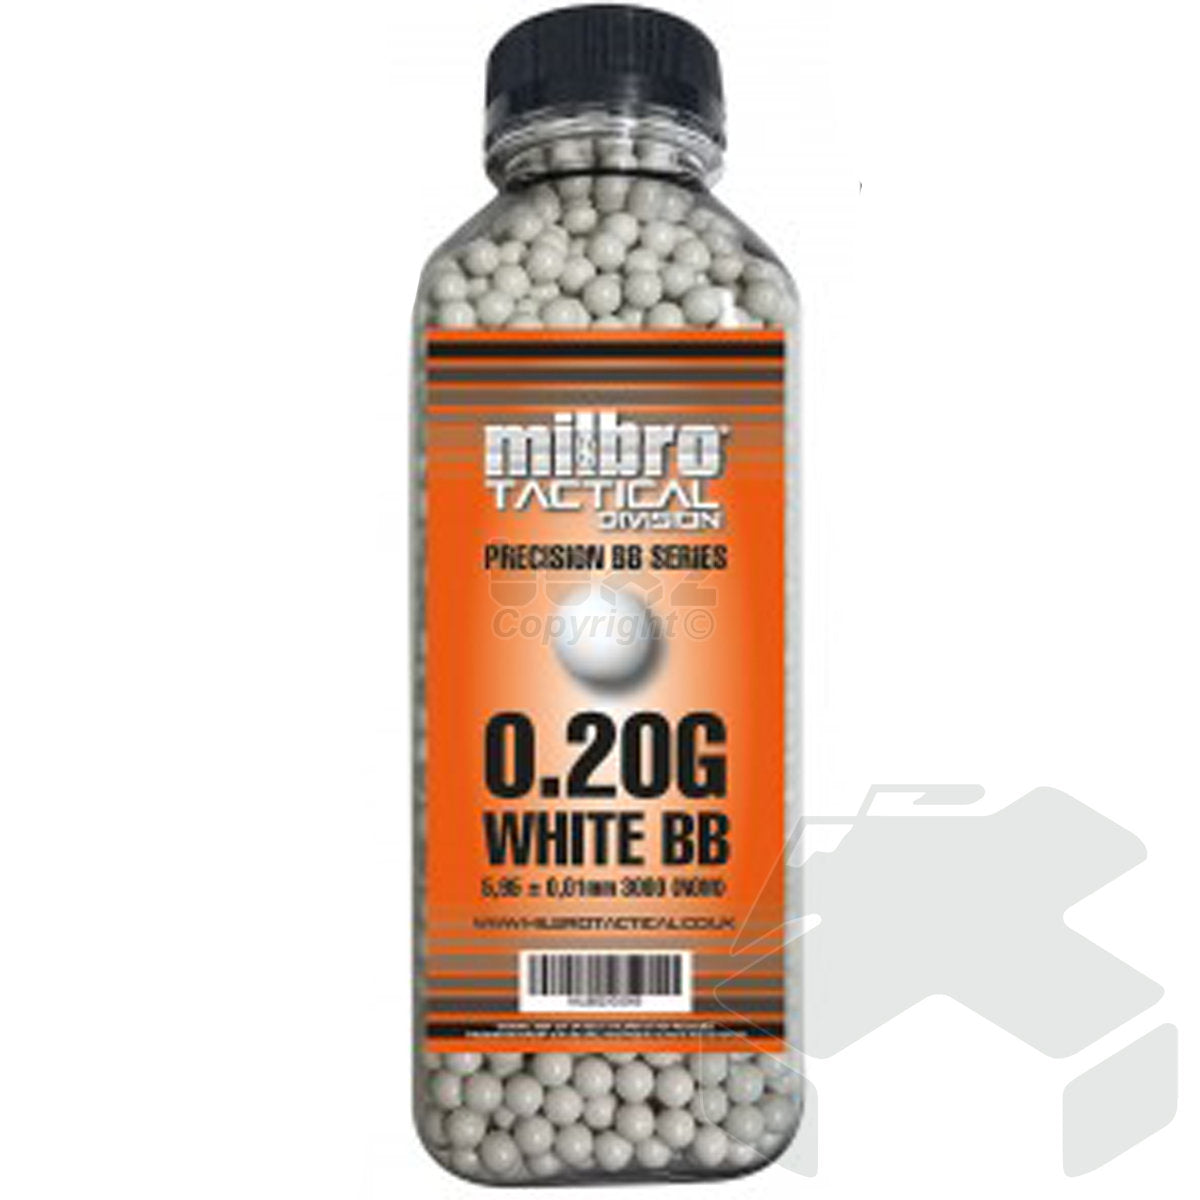 Milbro Tactical Division 0.20G 6mm BB 3000 Pcs Bottle - White